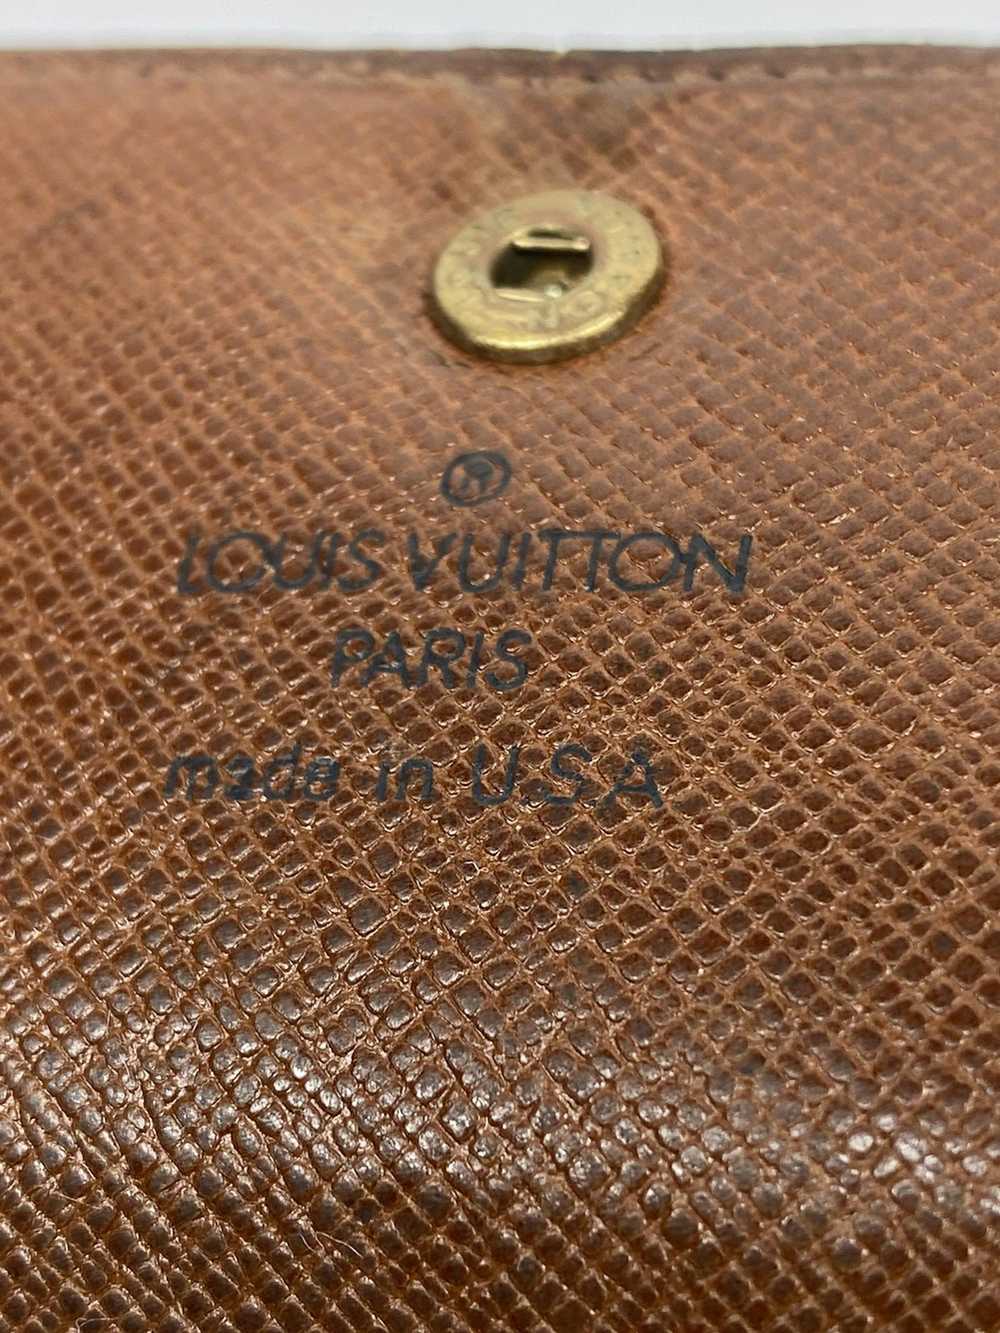 Louis Vuitton Monogram Trifold Wallet - image 5